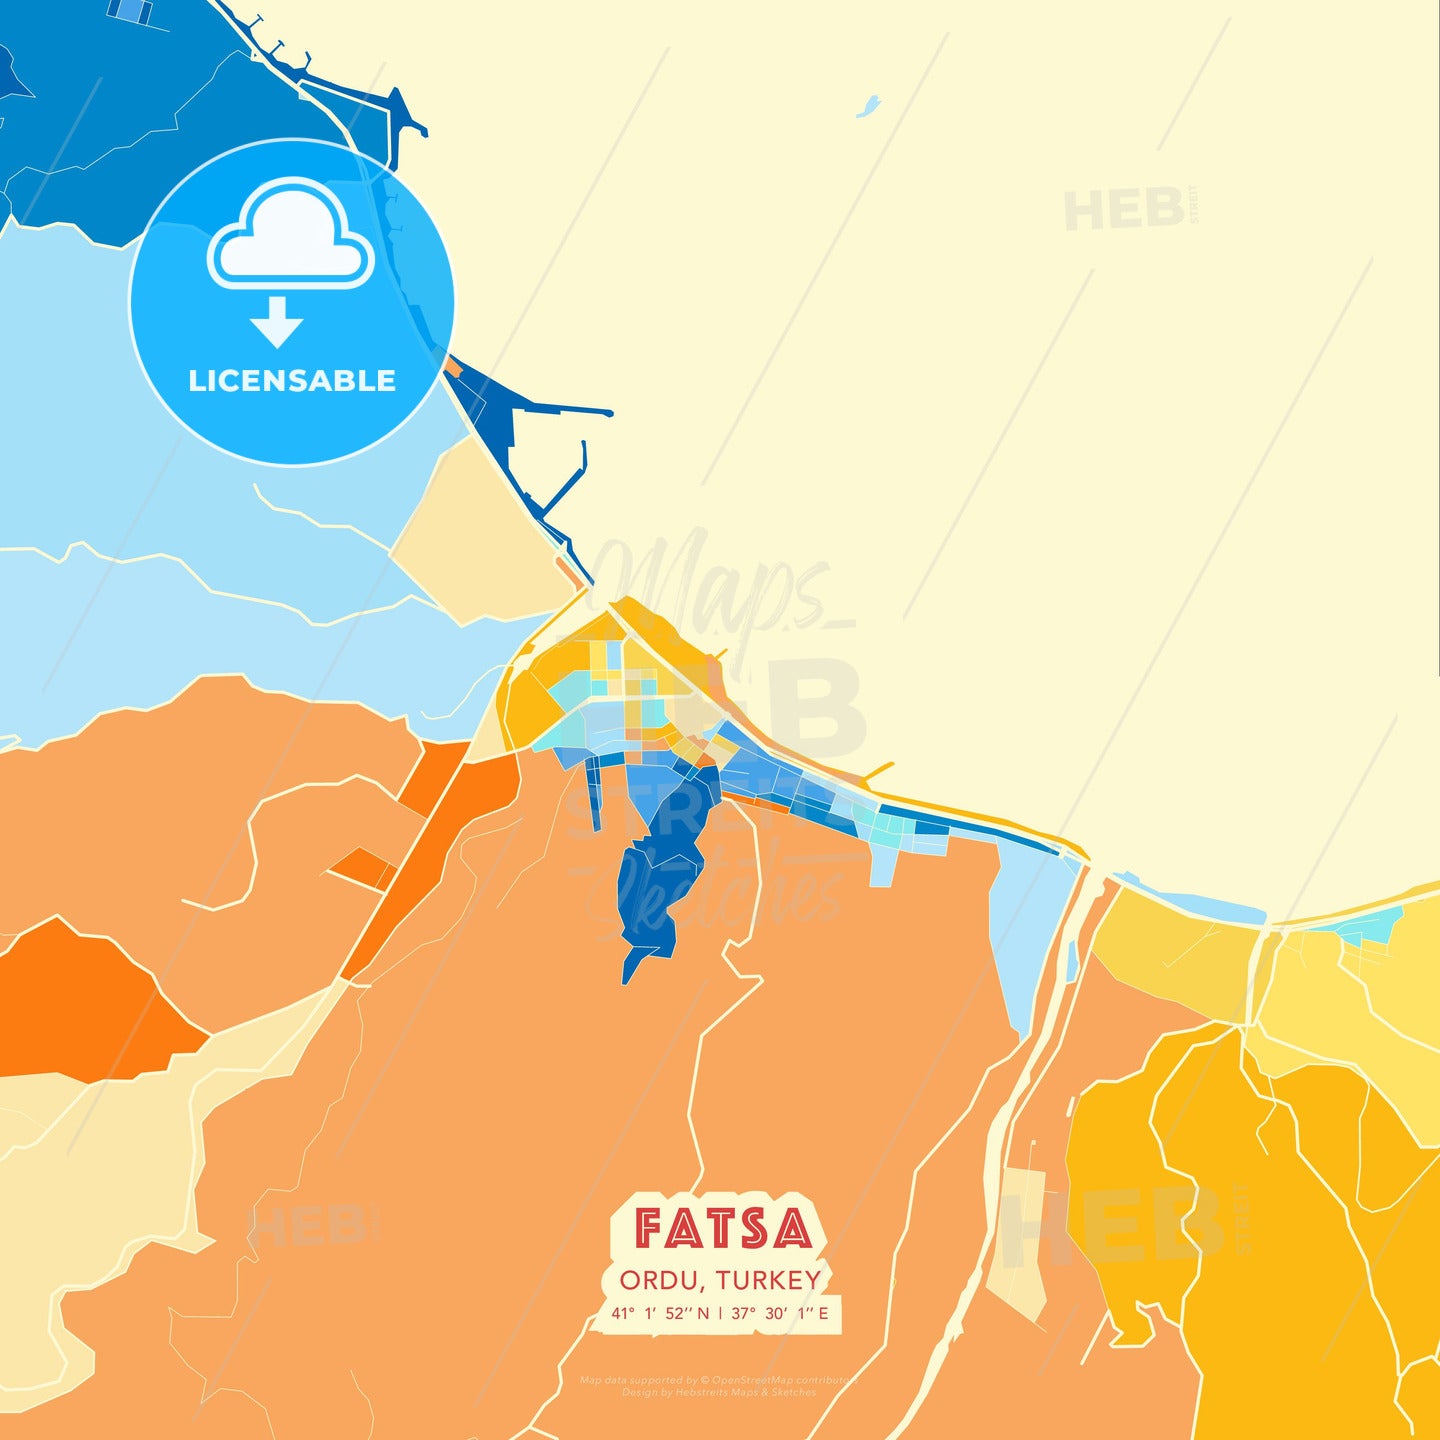 Fatsa, Ordu, Turkey, map - HEBSTREITS Sketches